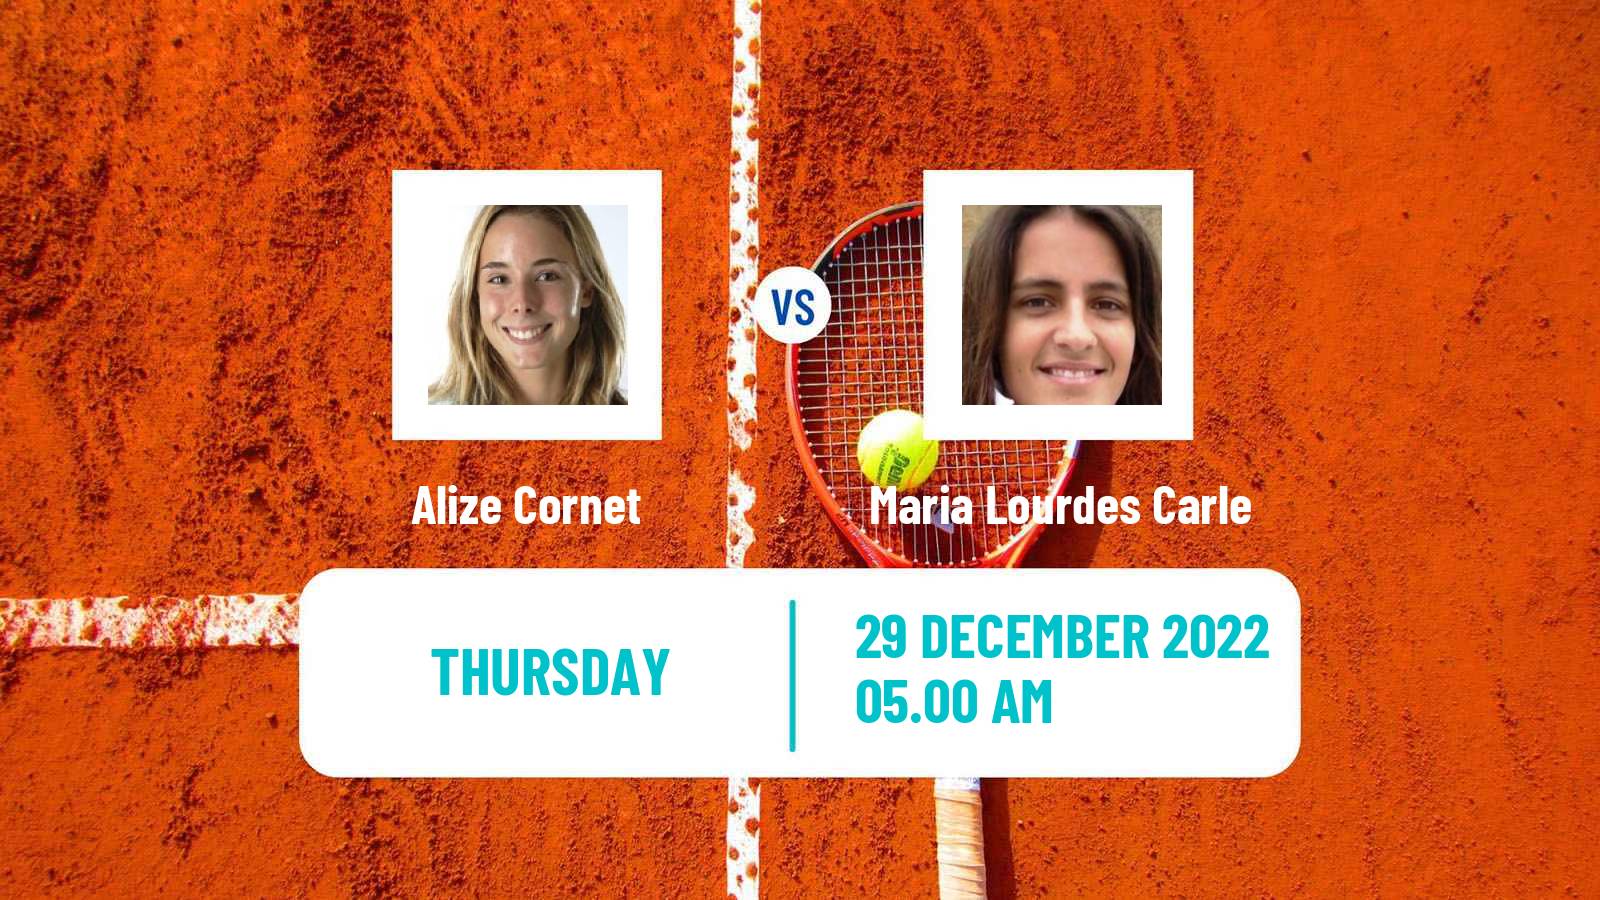 Tennis WTA United Cup Alize Cornet - Maria Lourdes Carle